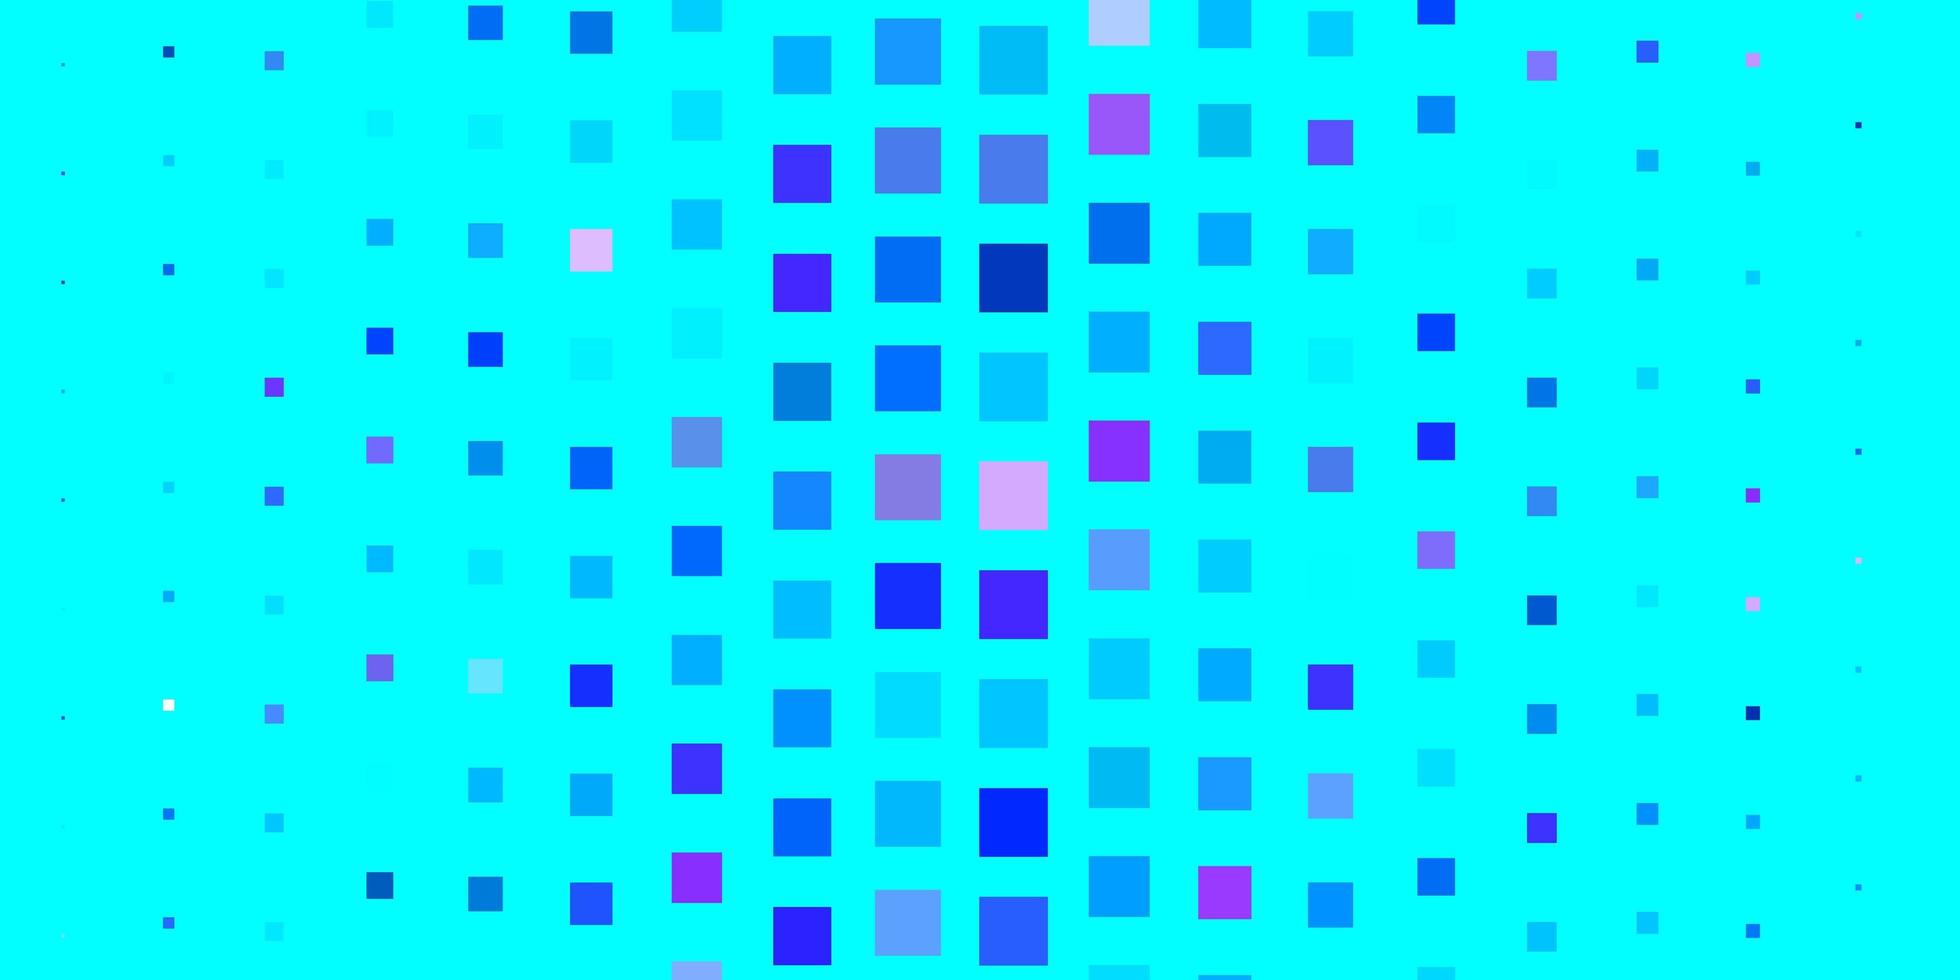 textura vector rosa claro, azul em estilo retangular.